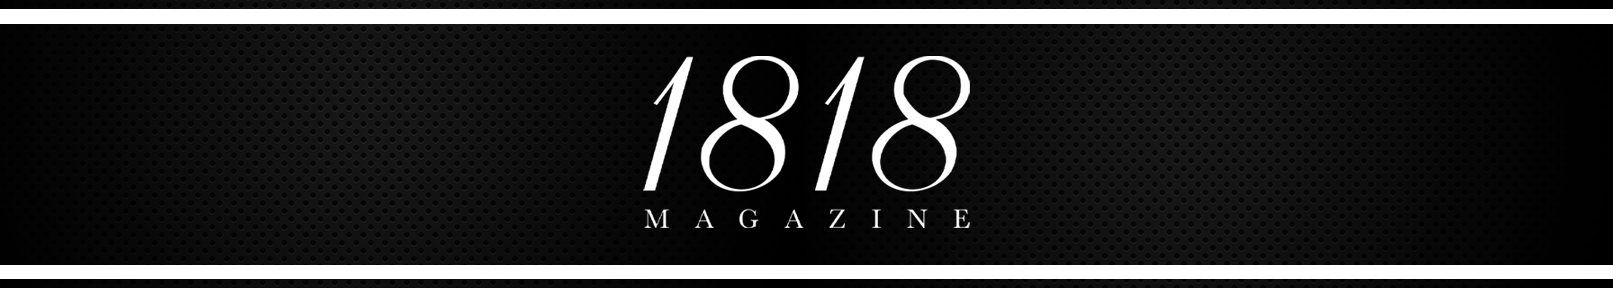 1818 magazine logo